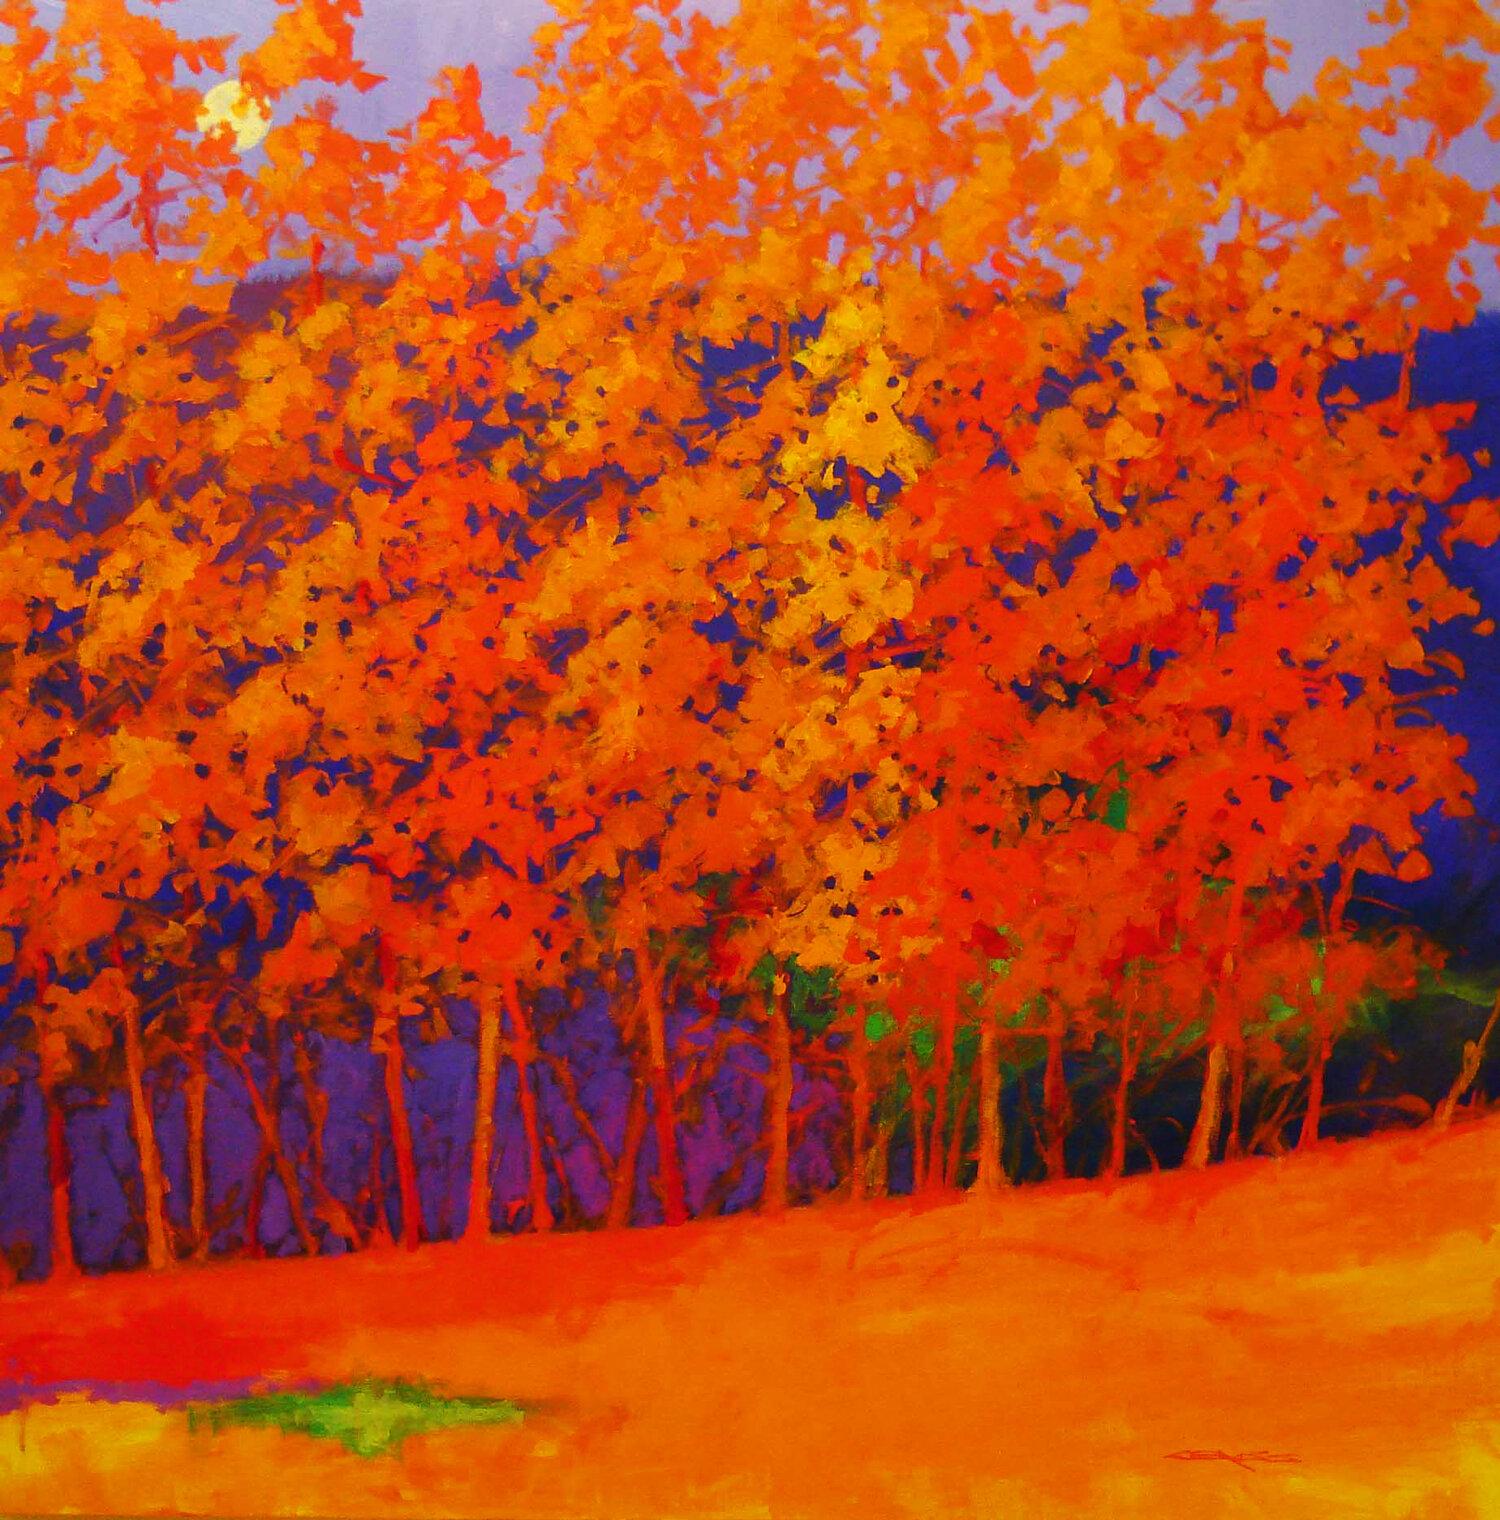 Landscape Painting Charles Emery Ross - C.E. Ross, « Vibrant Day », paysage forestier abstrait coloré orange-violet